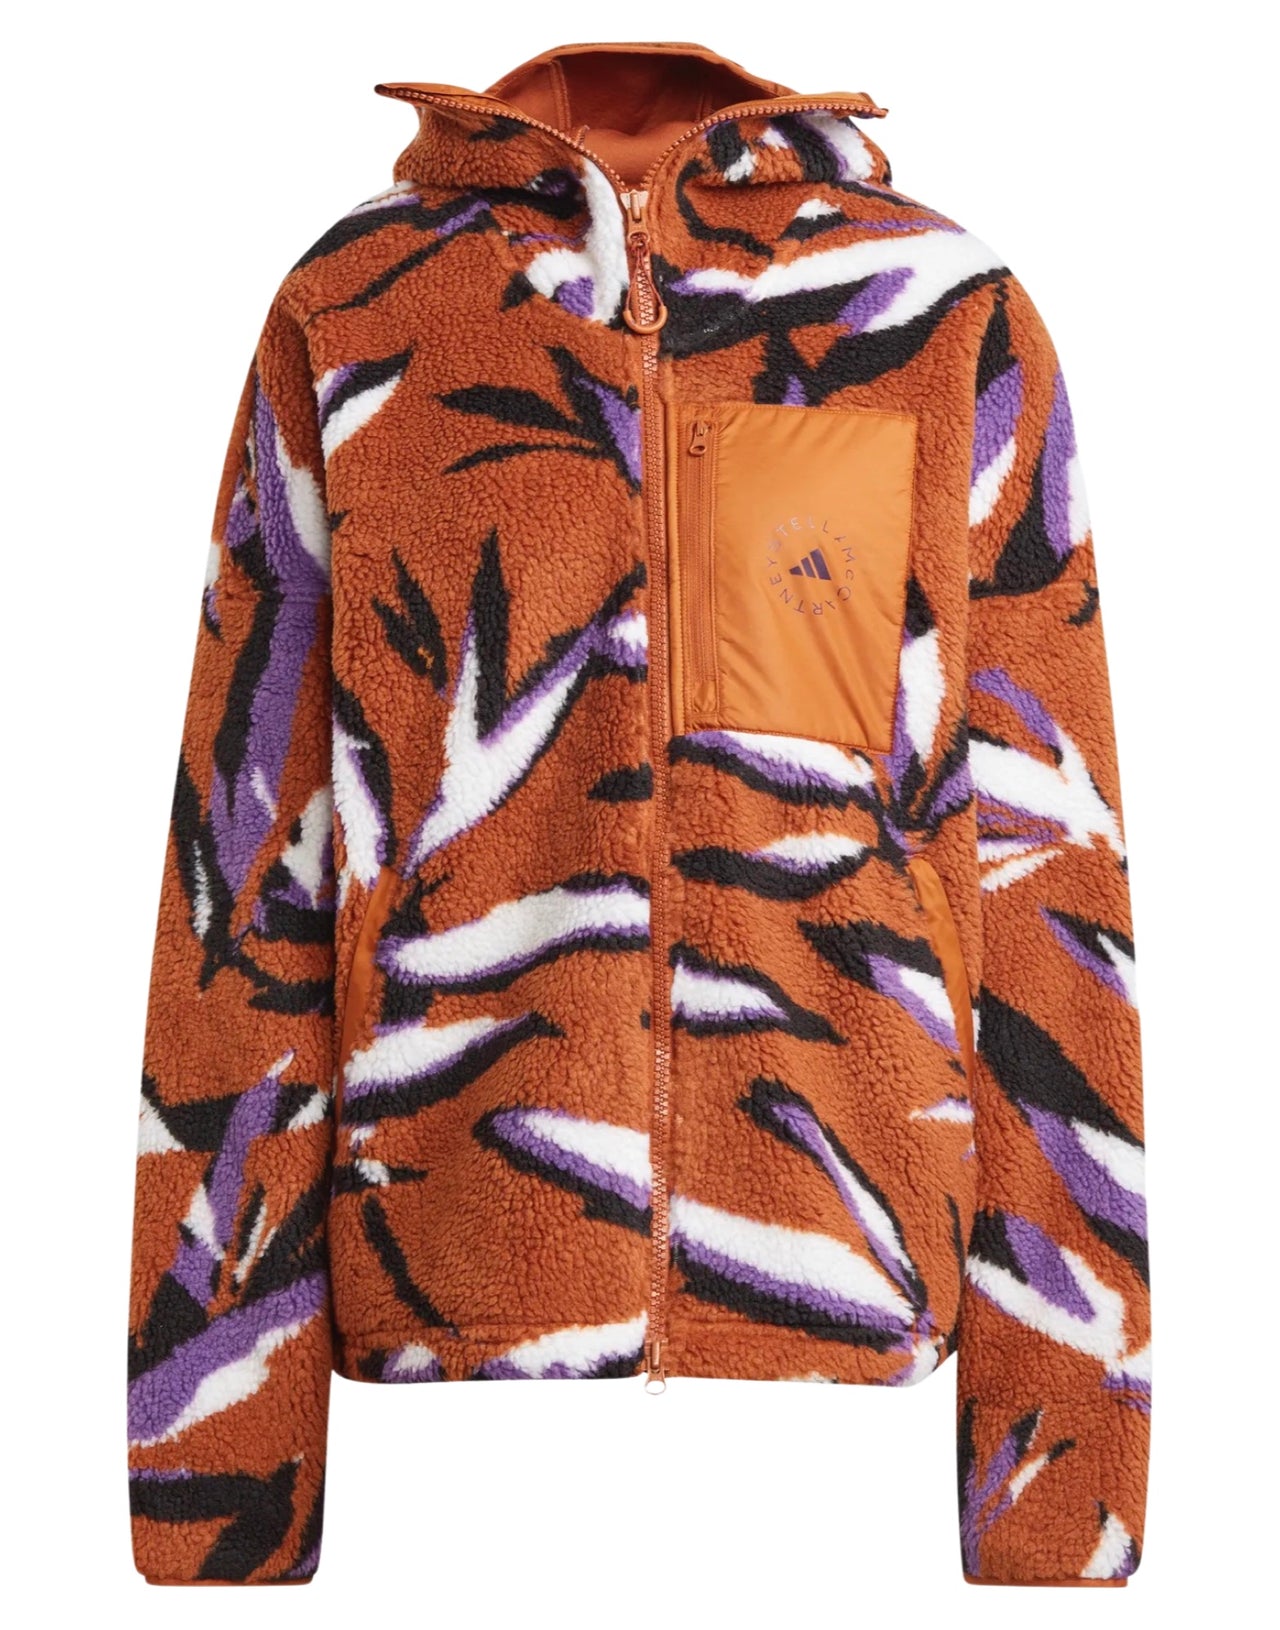 Adidas by Stella McCartney Giacca camouflage caramello